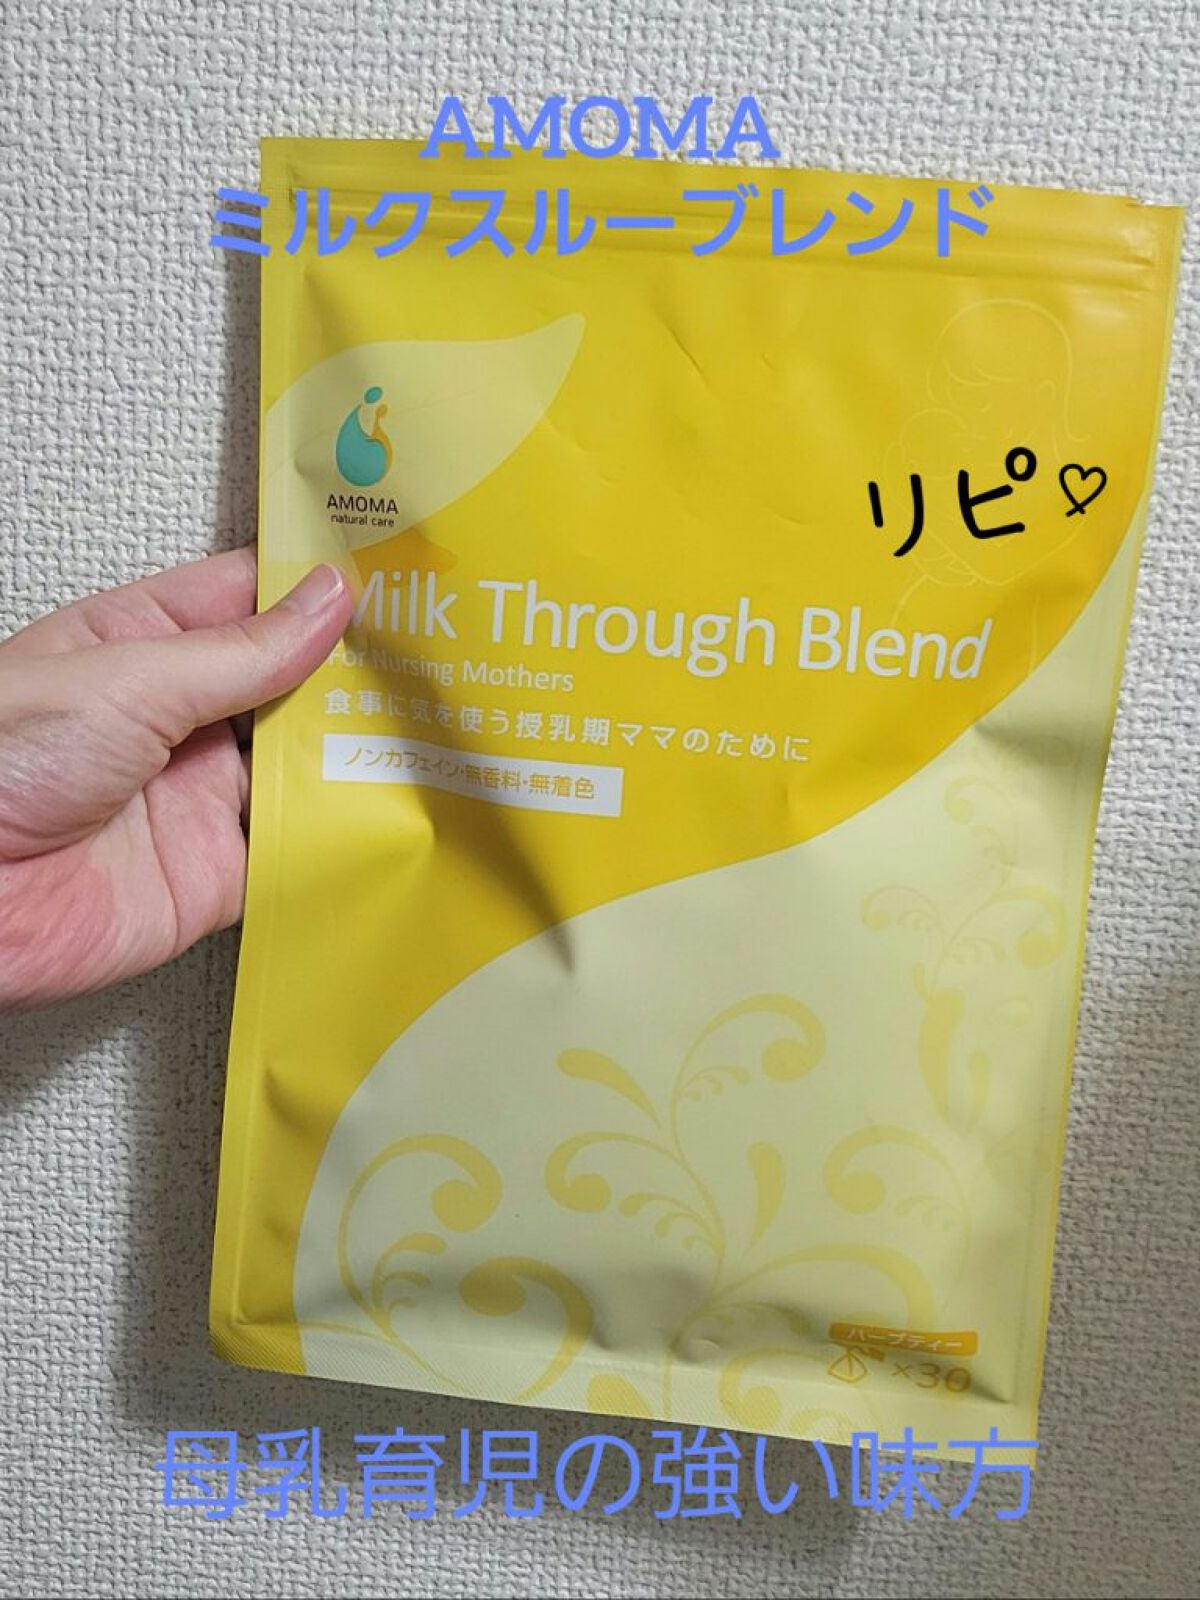 AMOMAナチュラルケア ミルクスルーブレンド - 授乳/お食事用品